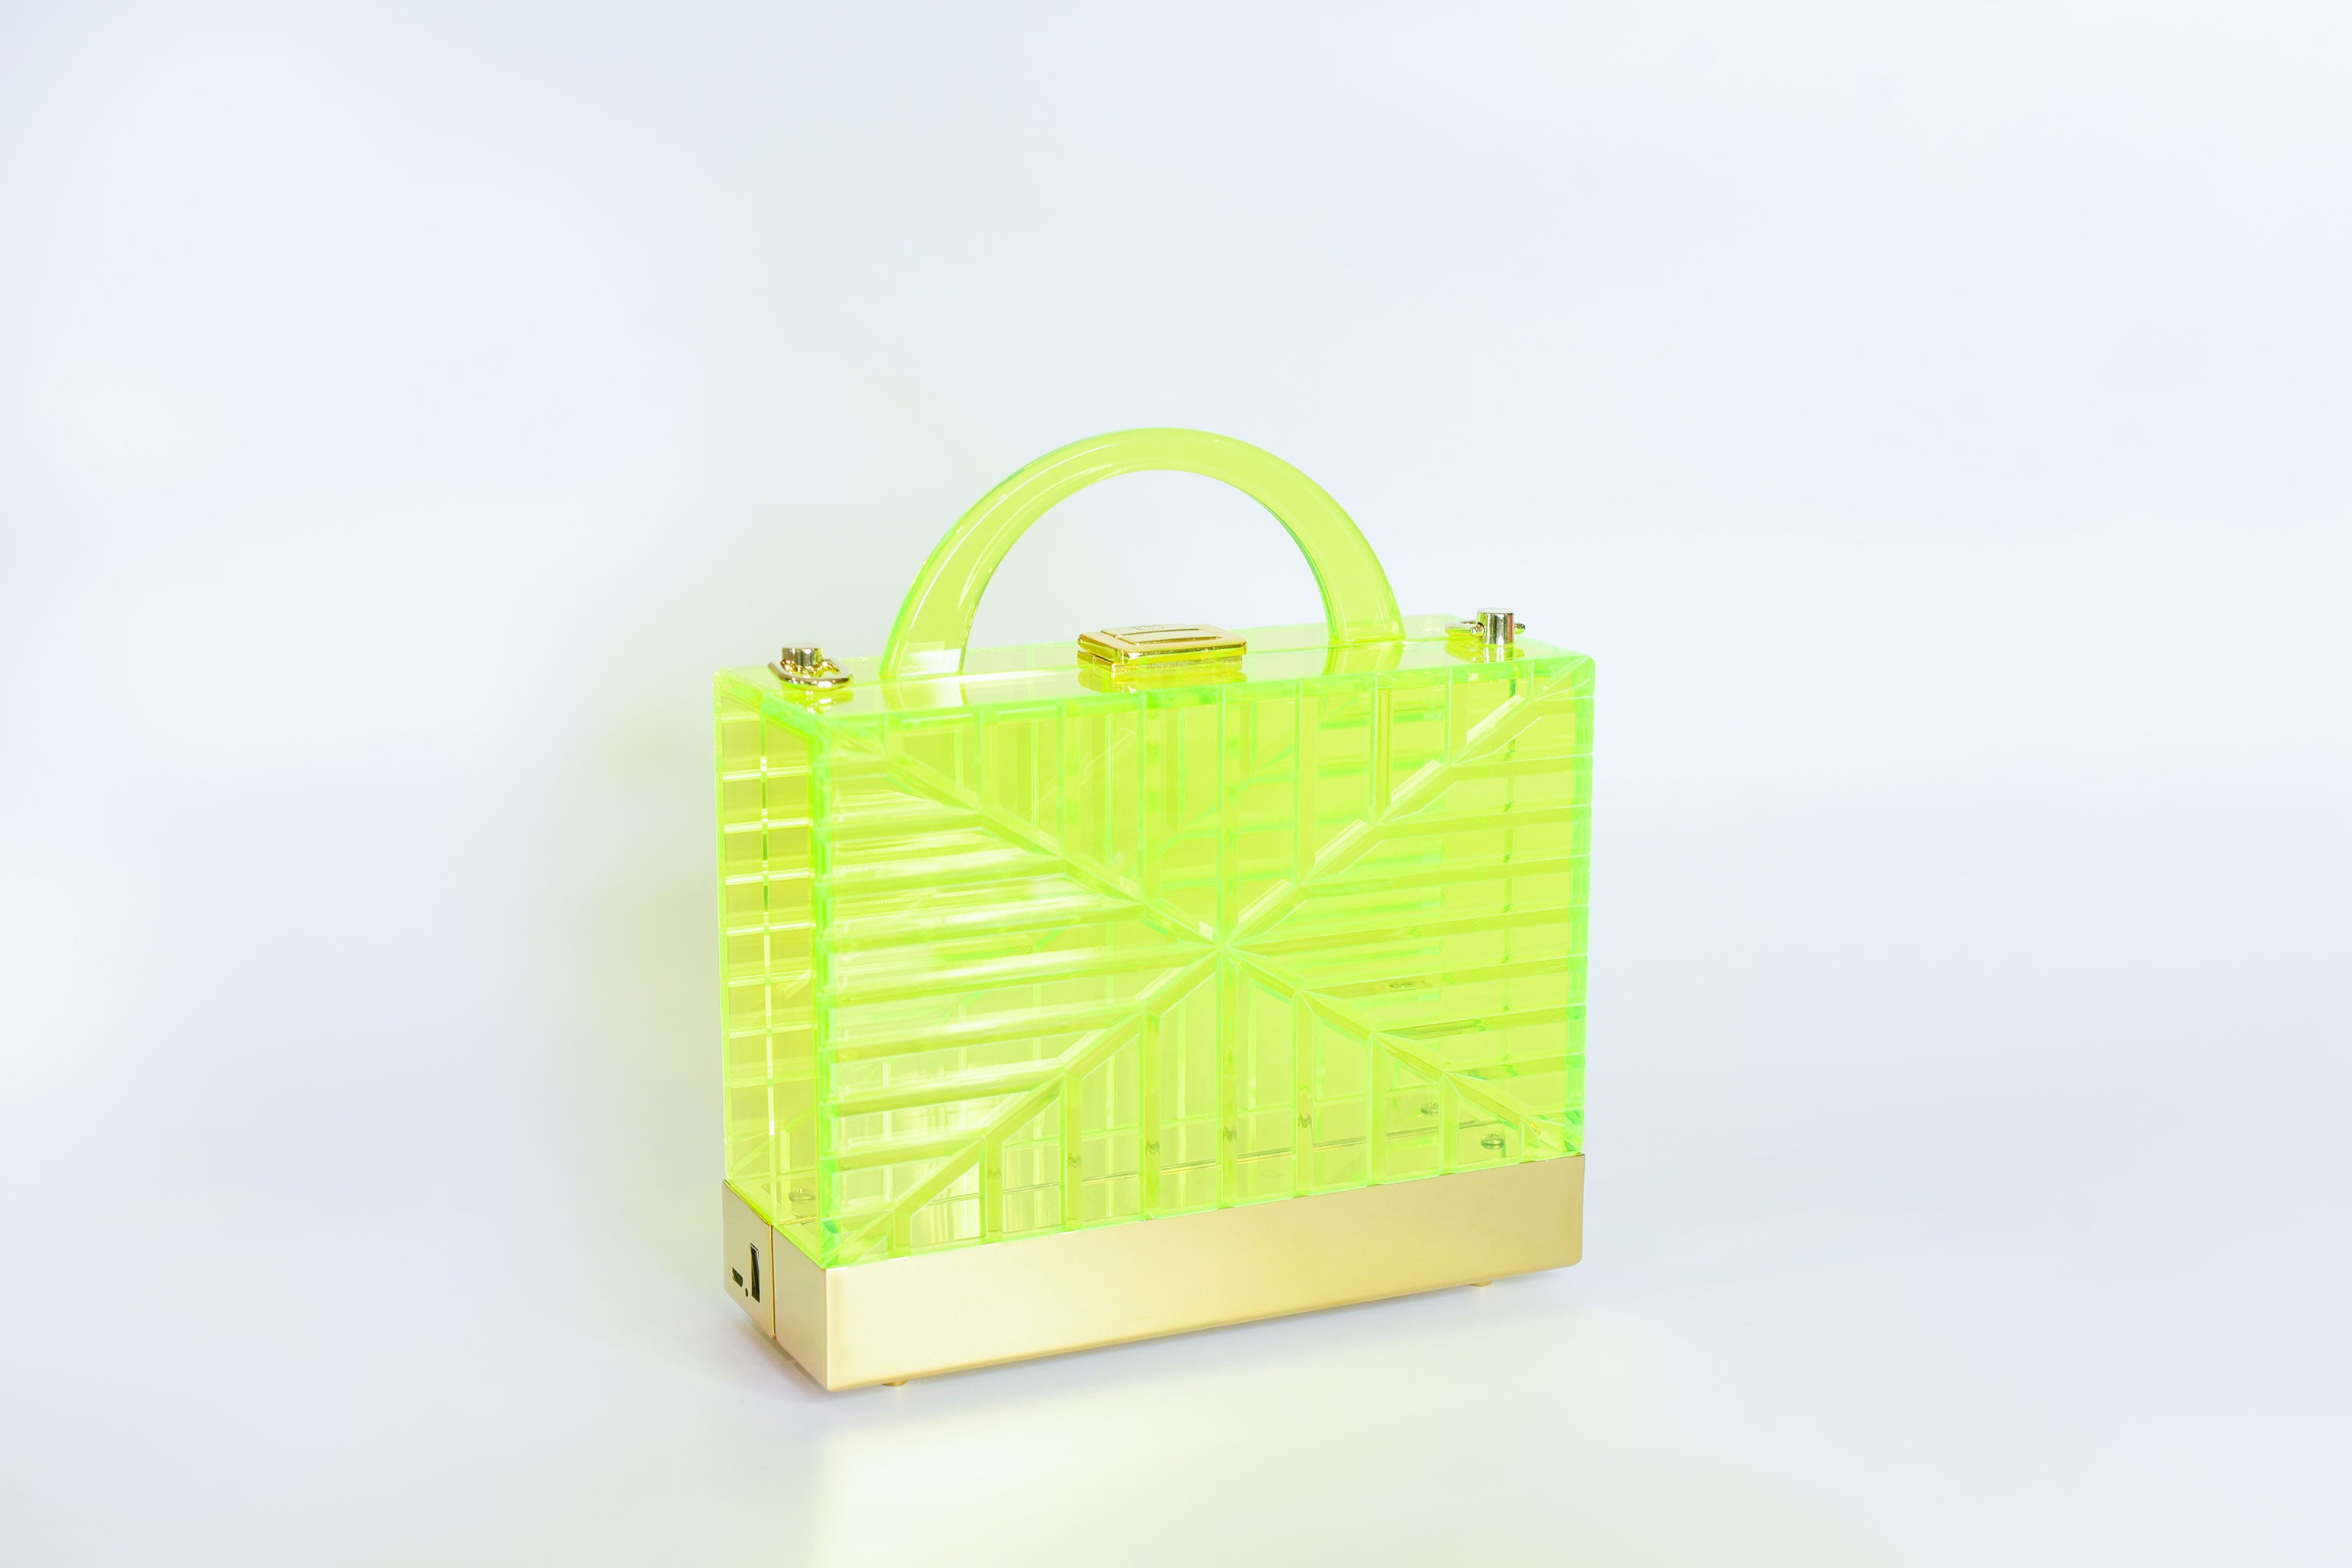 Kim Cig DECO CLUTCH in Neon Green/Gold